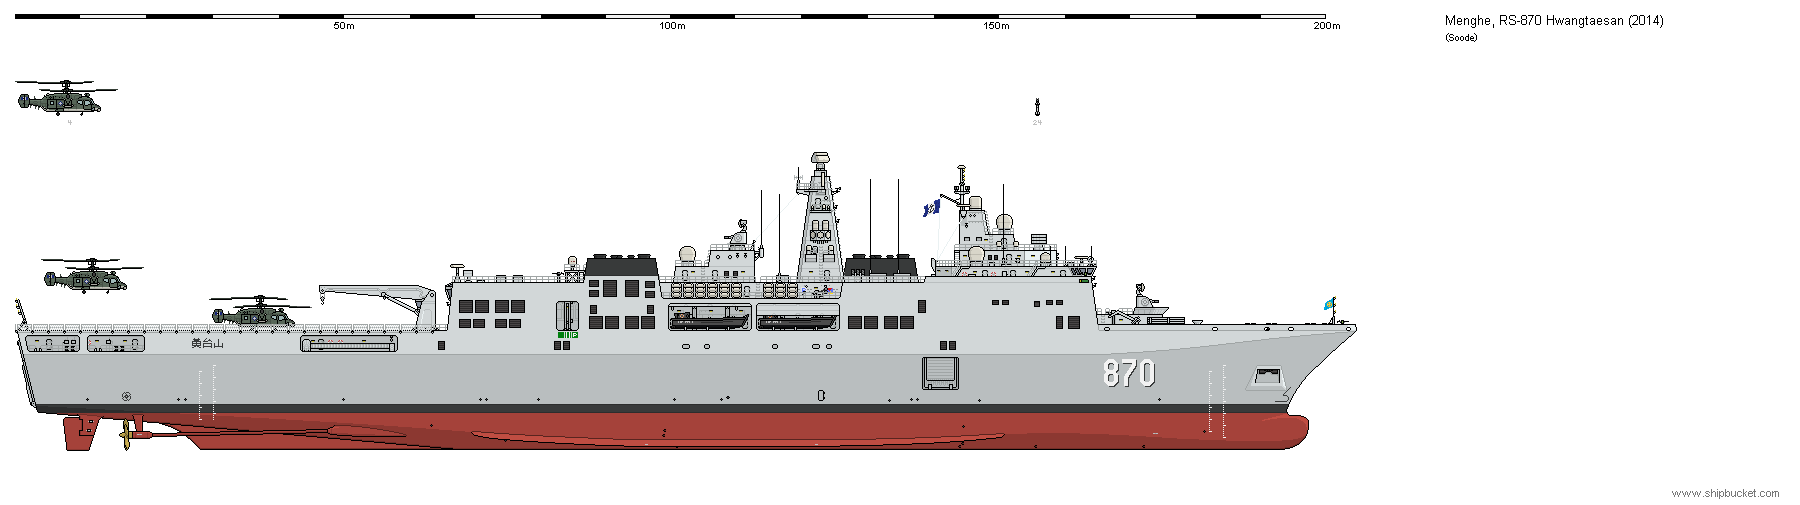 AU TWA - Page 2 - Shipbucket